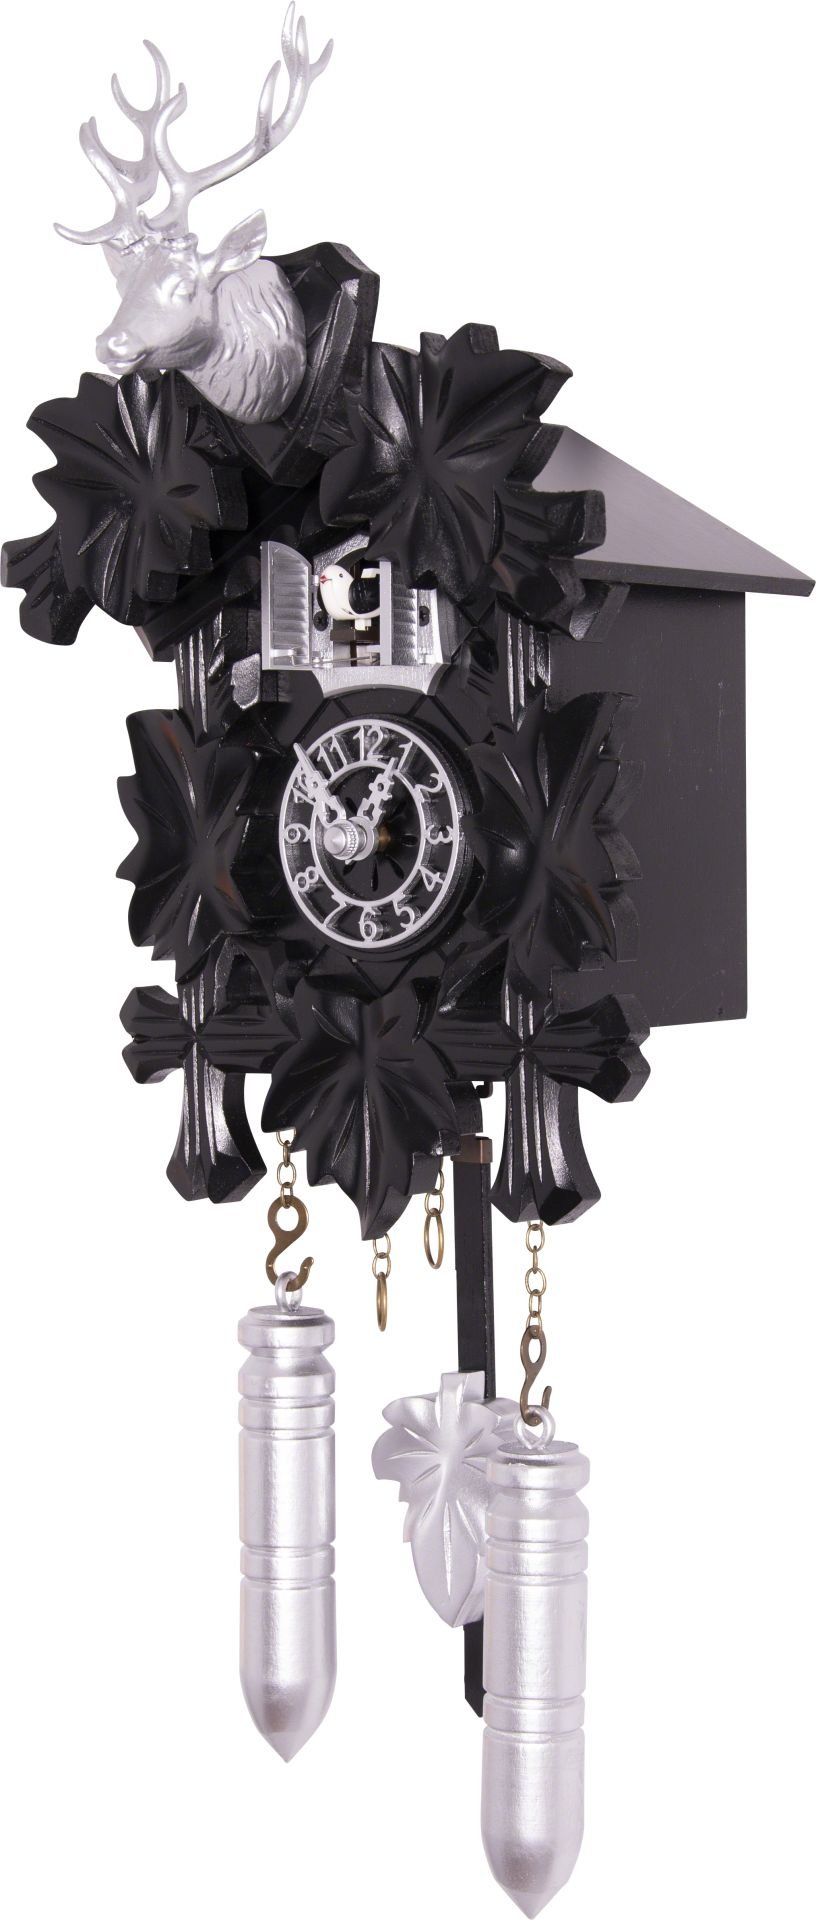 Reloj de cuco estilo moderno de cuarzo 22cm de Trenkle Uhren